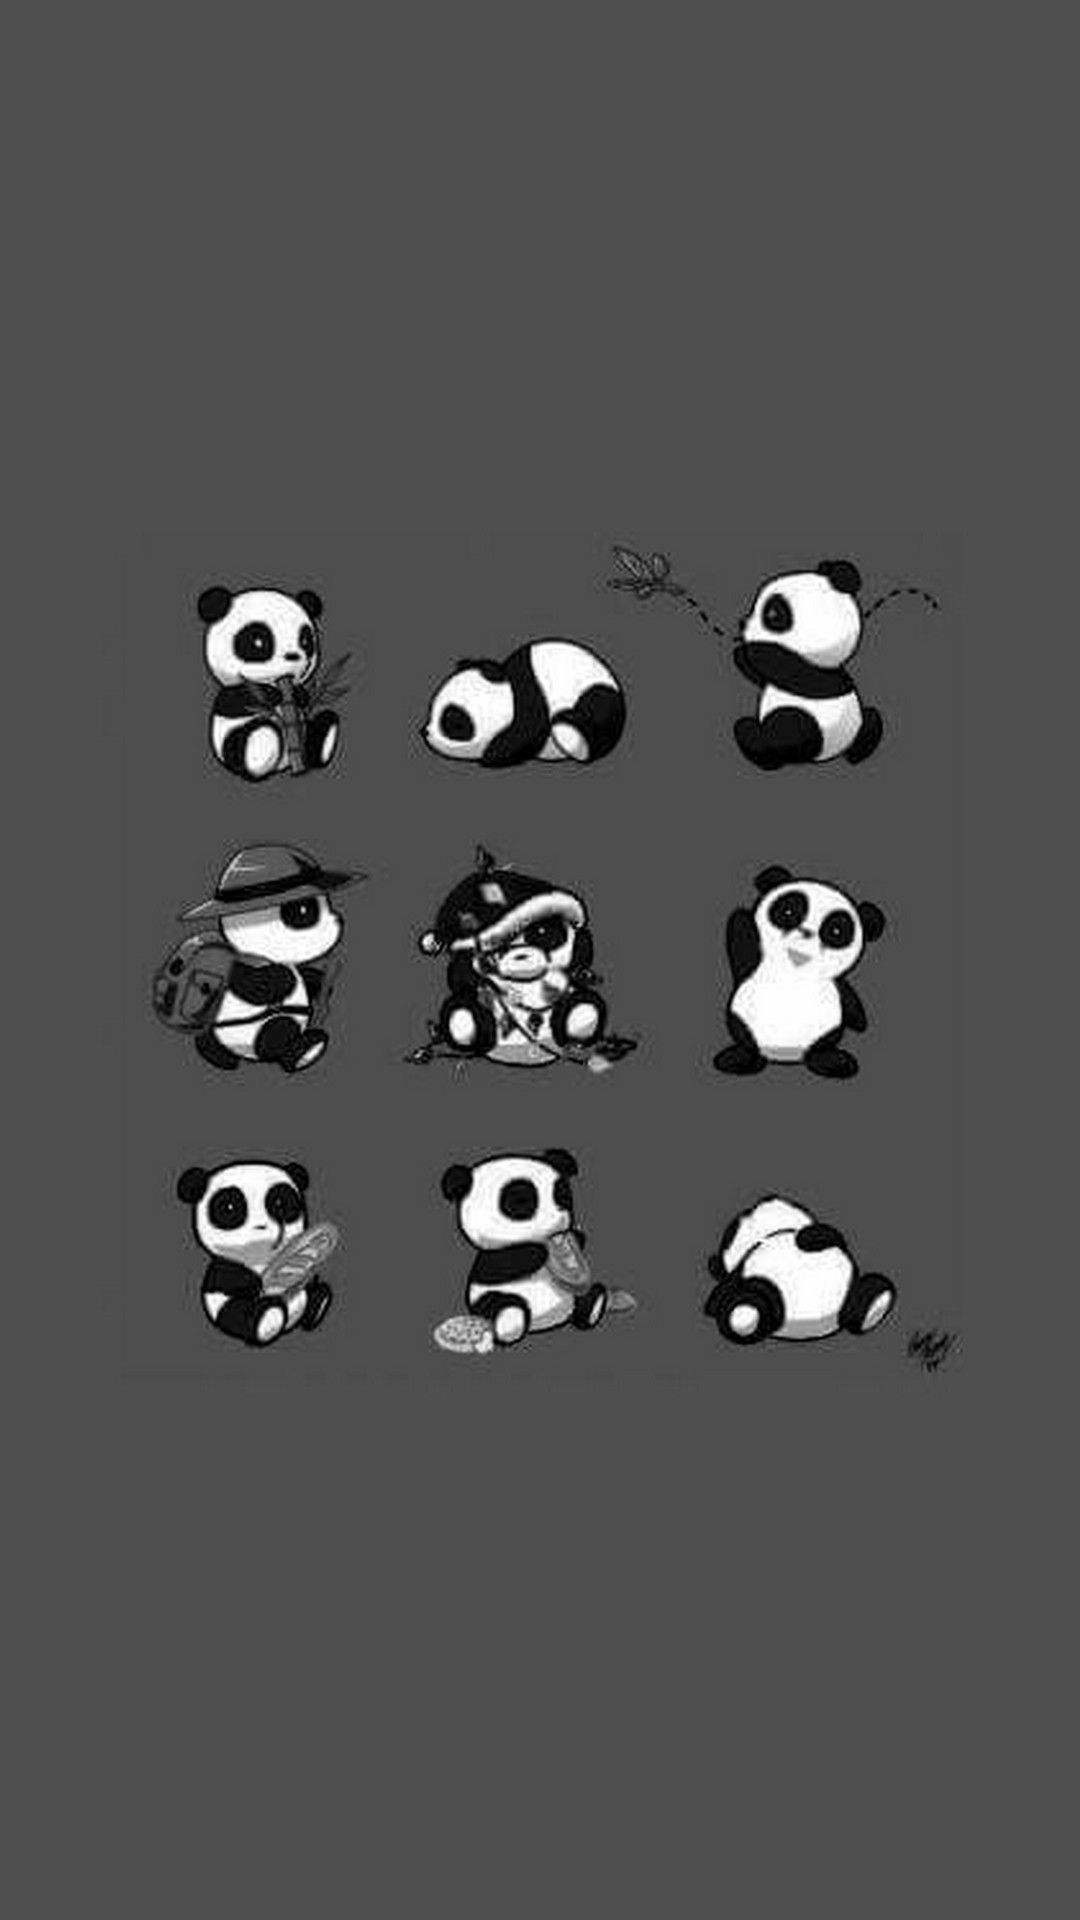 Animal Panda Wallpaper